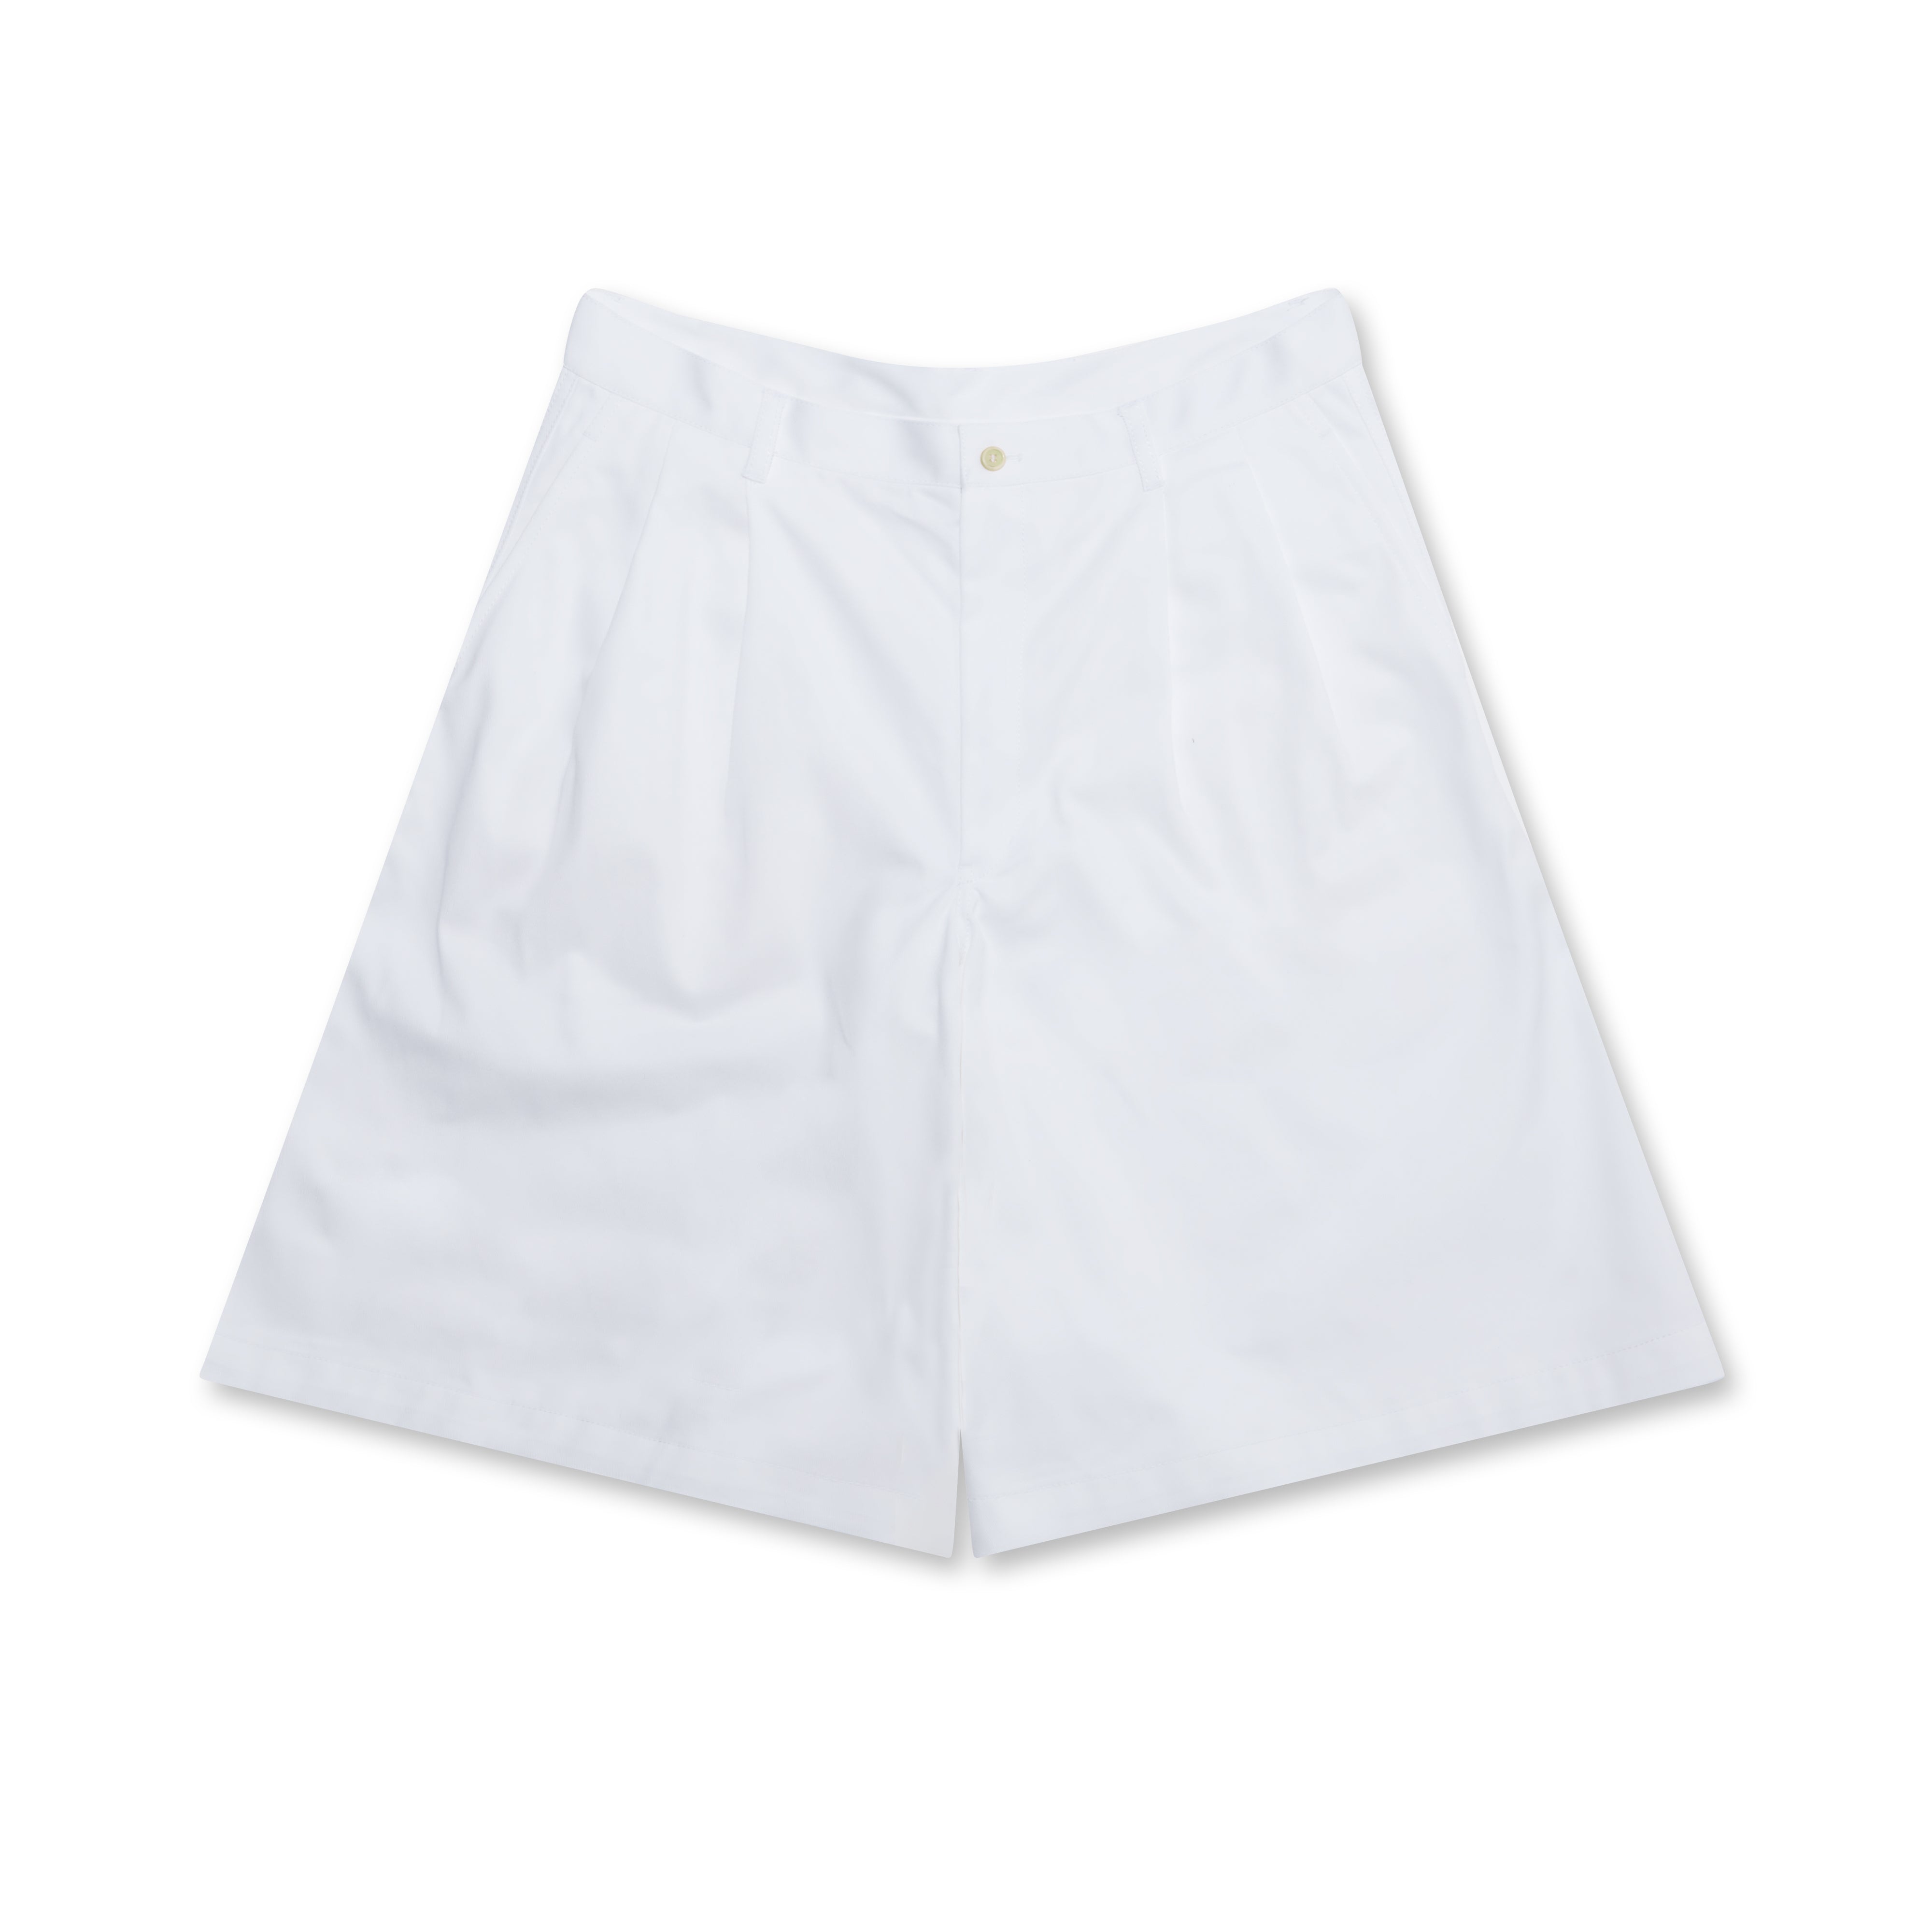 CDG Shirt - Men's Cotton Twill Shorts - (White)